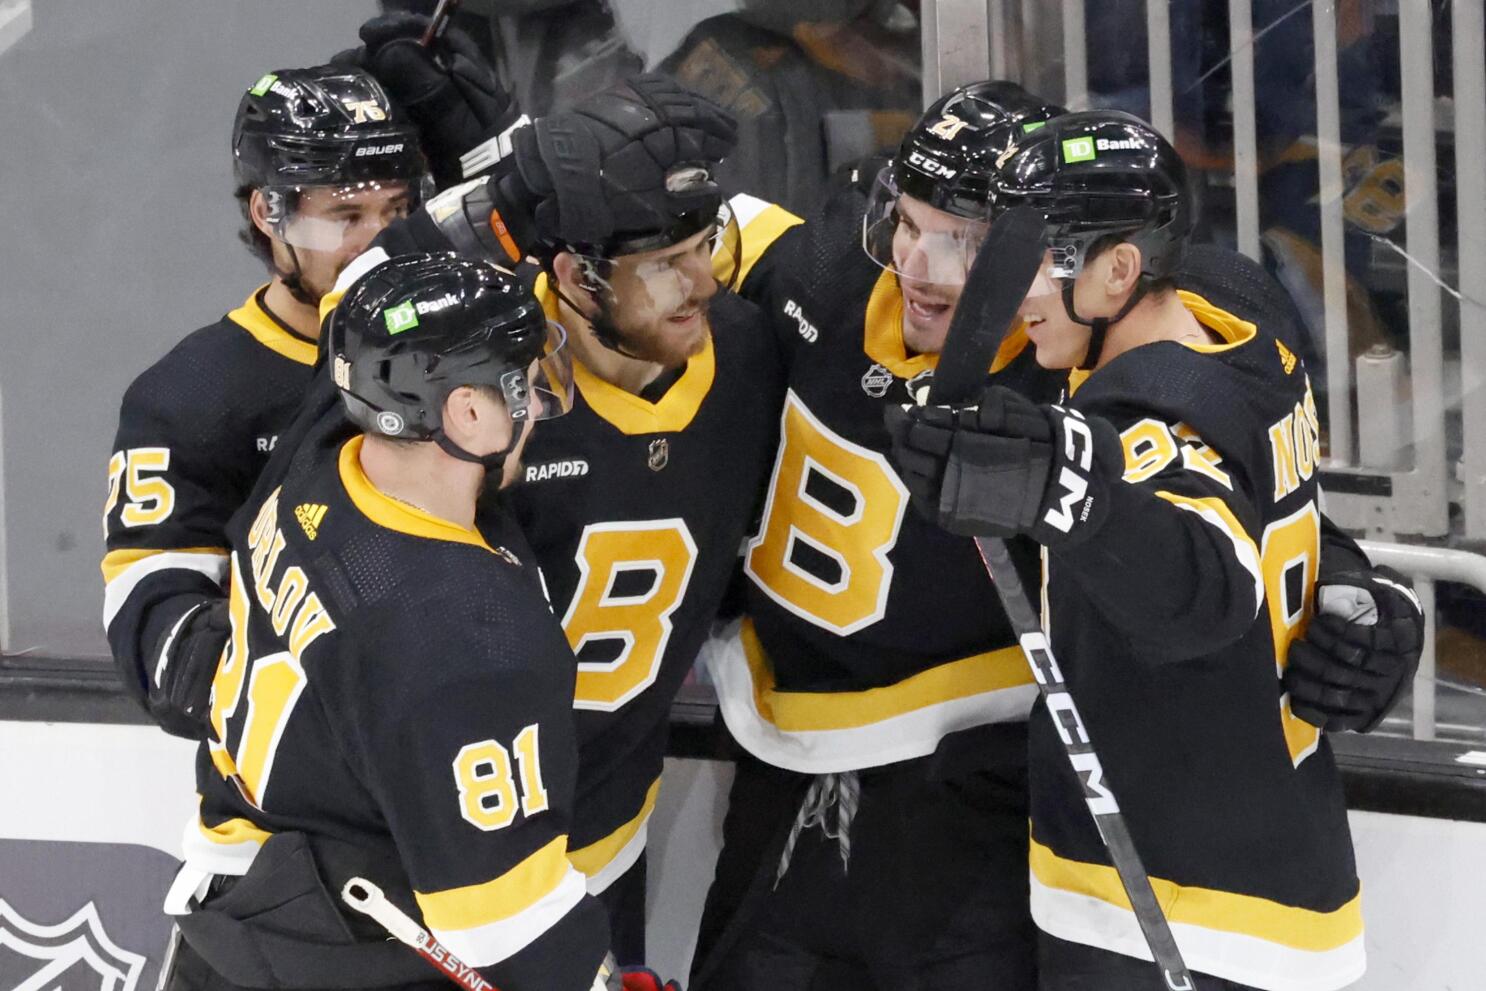 Jake DeBrusk requests trade from Bruins: Struggling forward, who